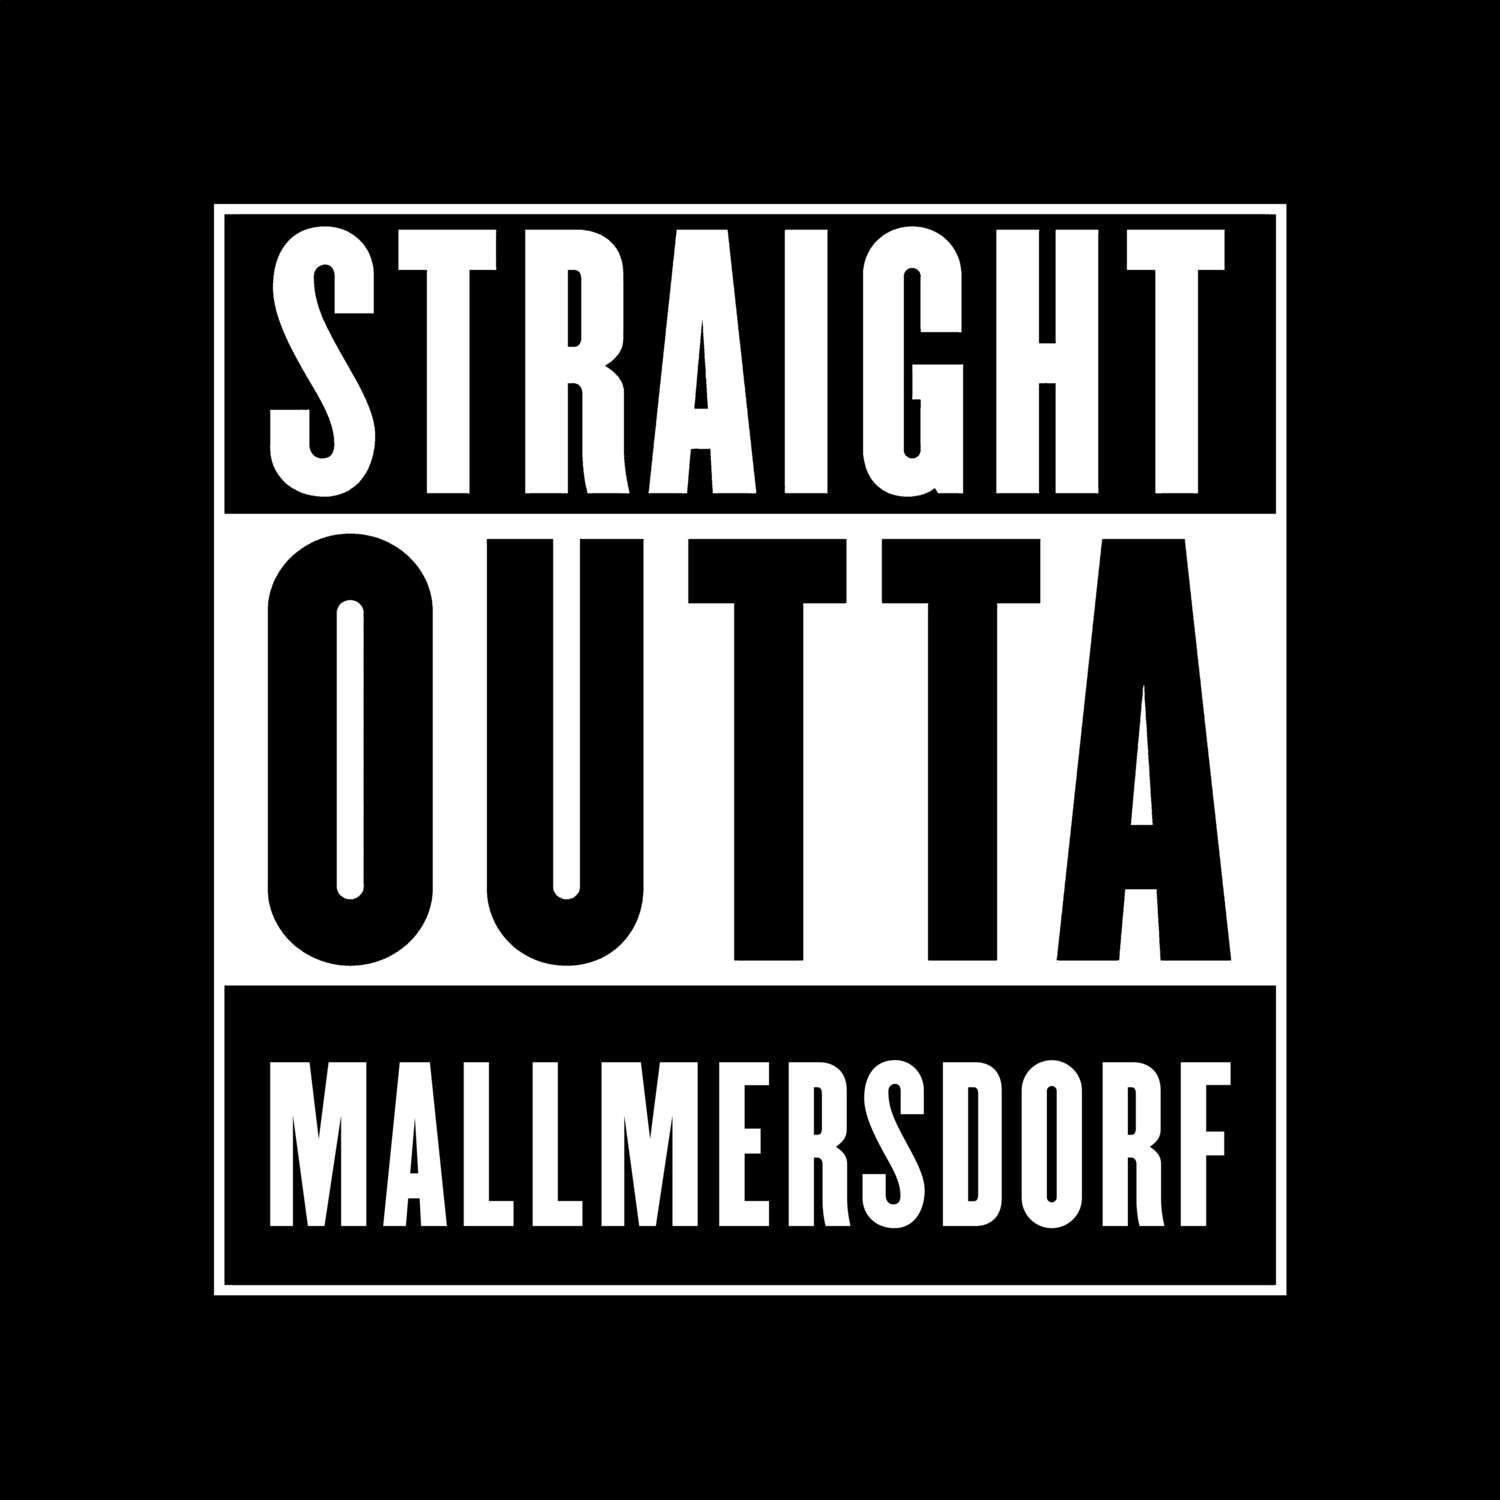 Mallmersdorf T-Shirt »Straight Outta«